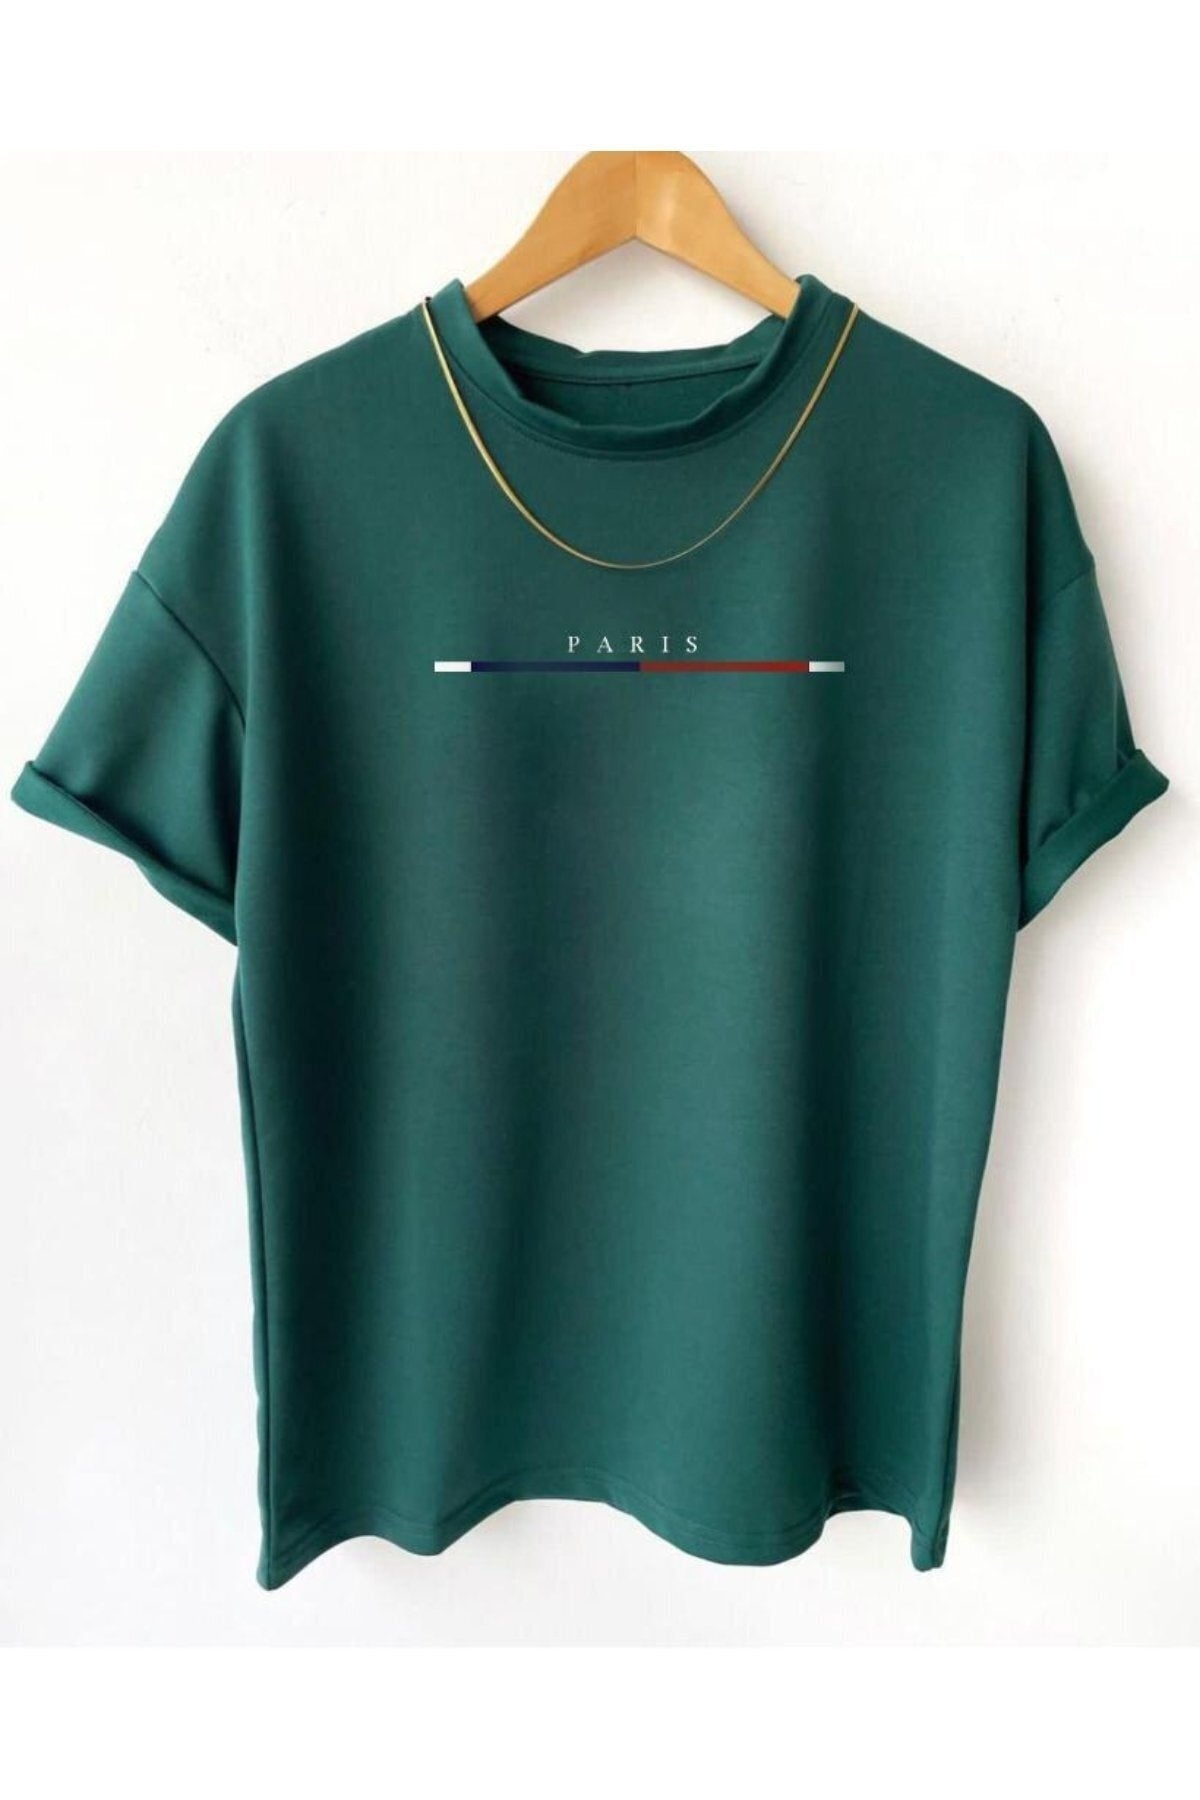 Men's Dark Green Chest Pinstripe Paris Printed Oversize Crew Neck T-Shirt